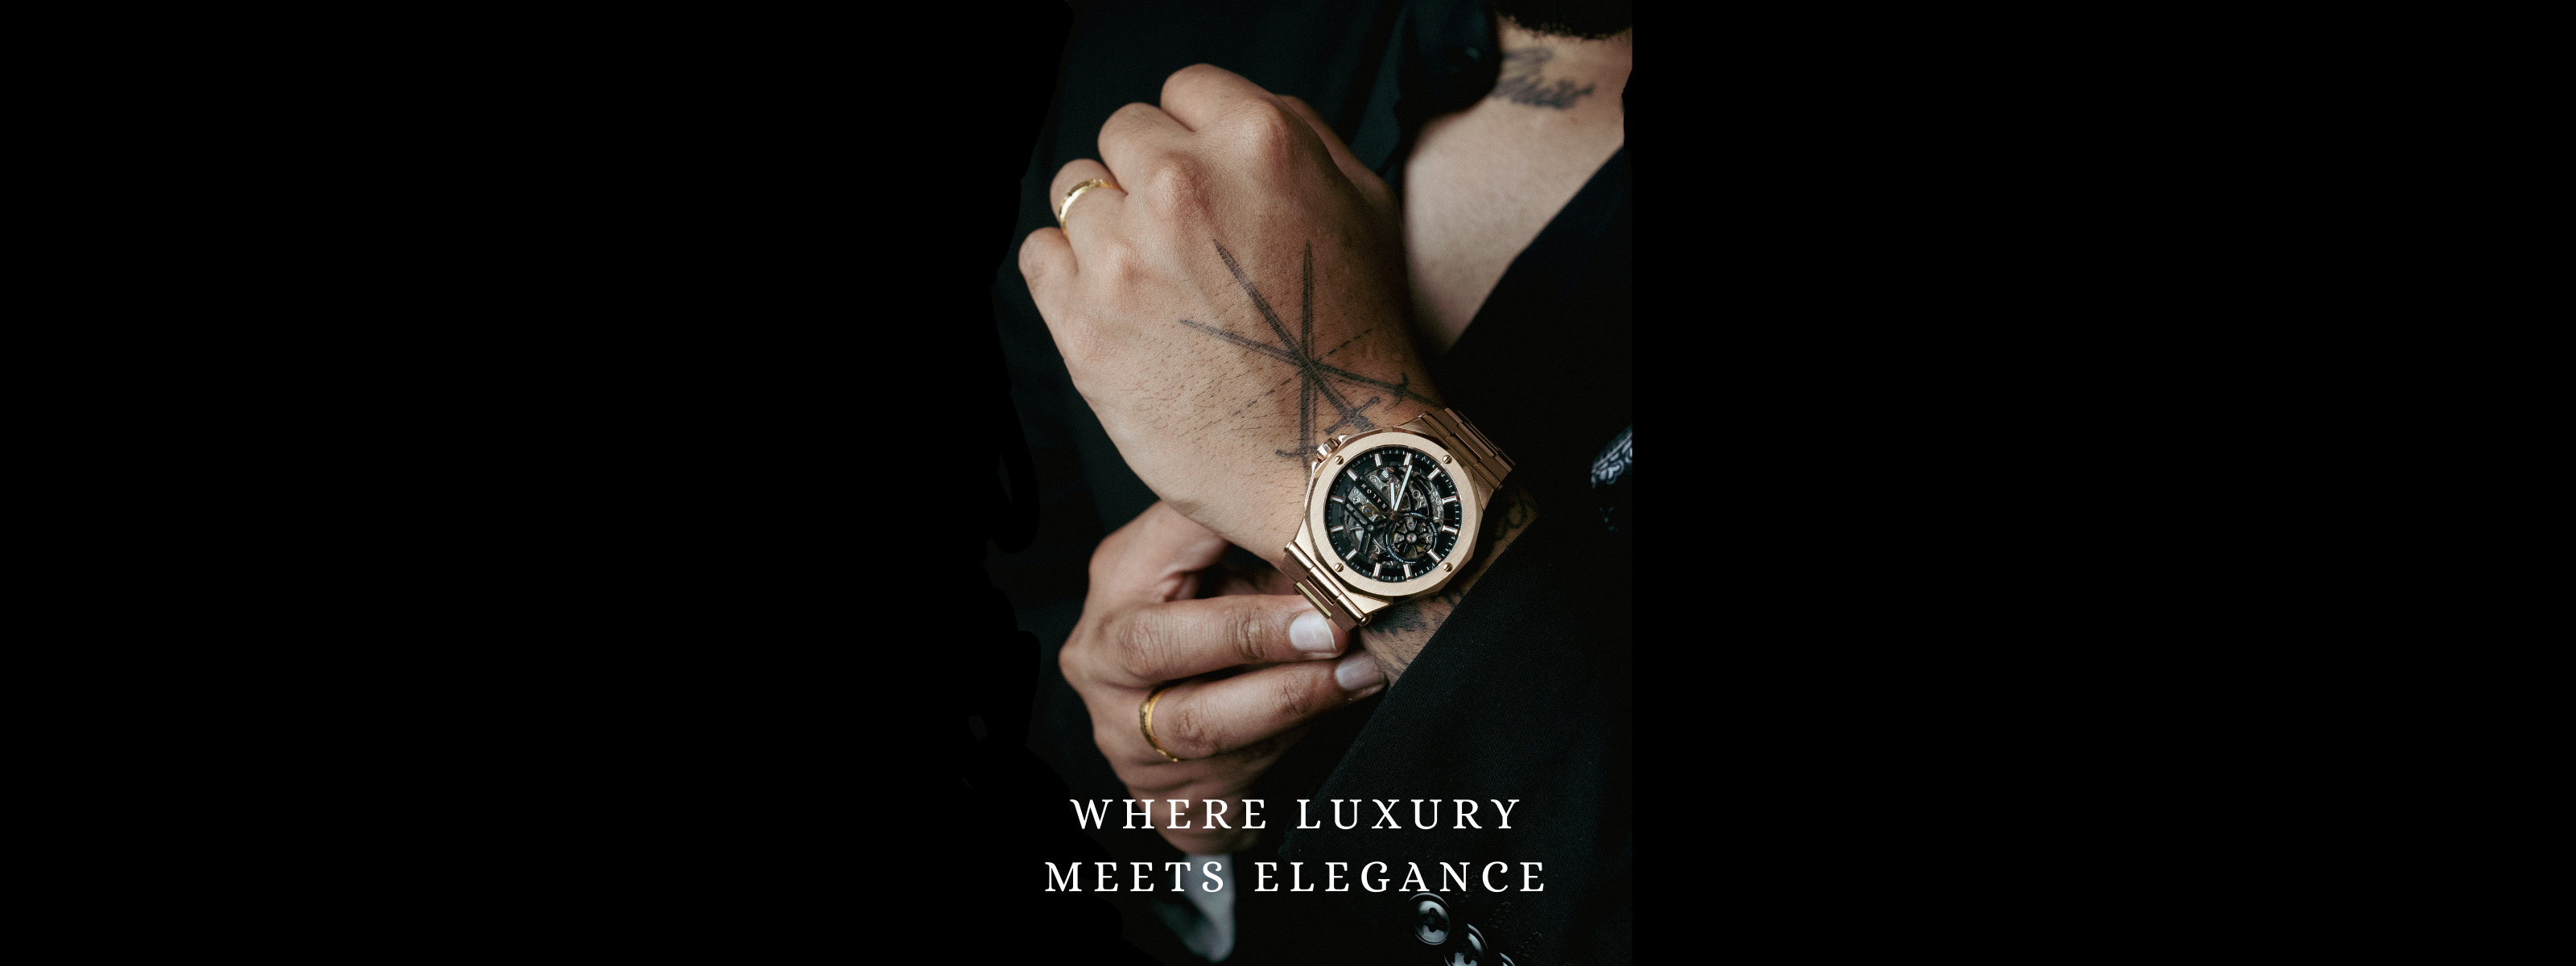 Luxury watch for men